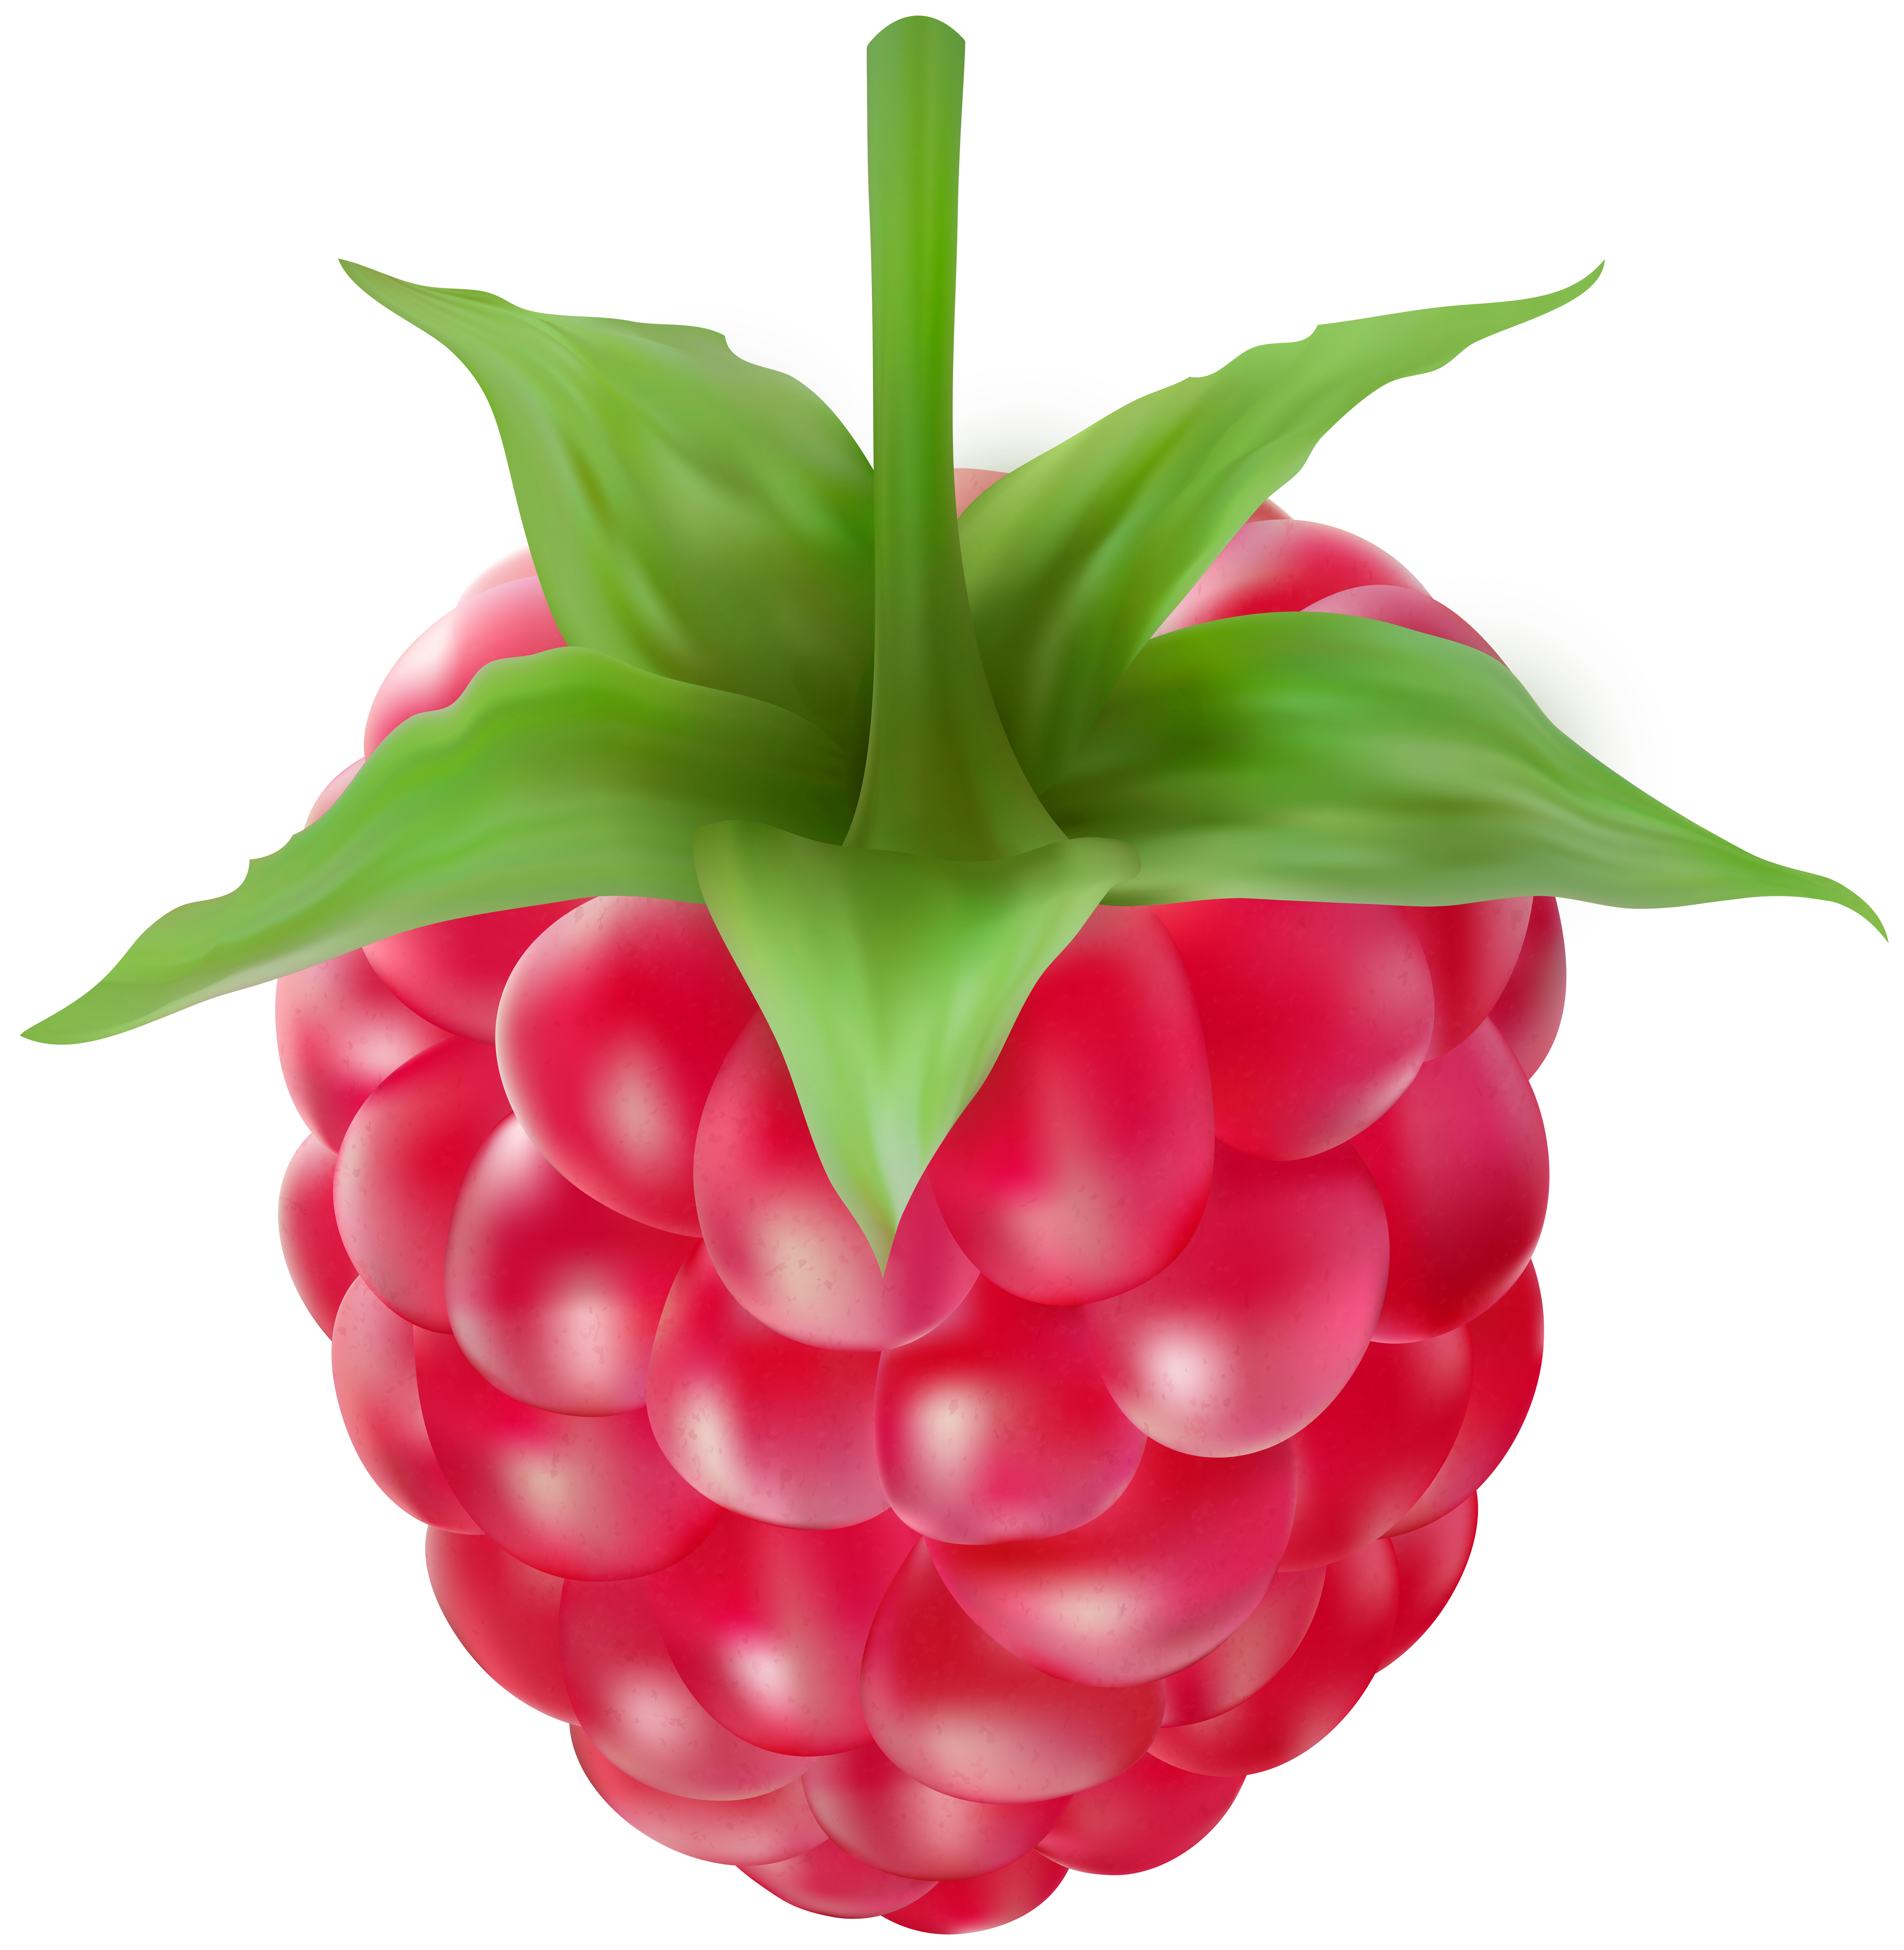 Raspberries Clipart Image.